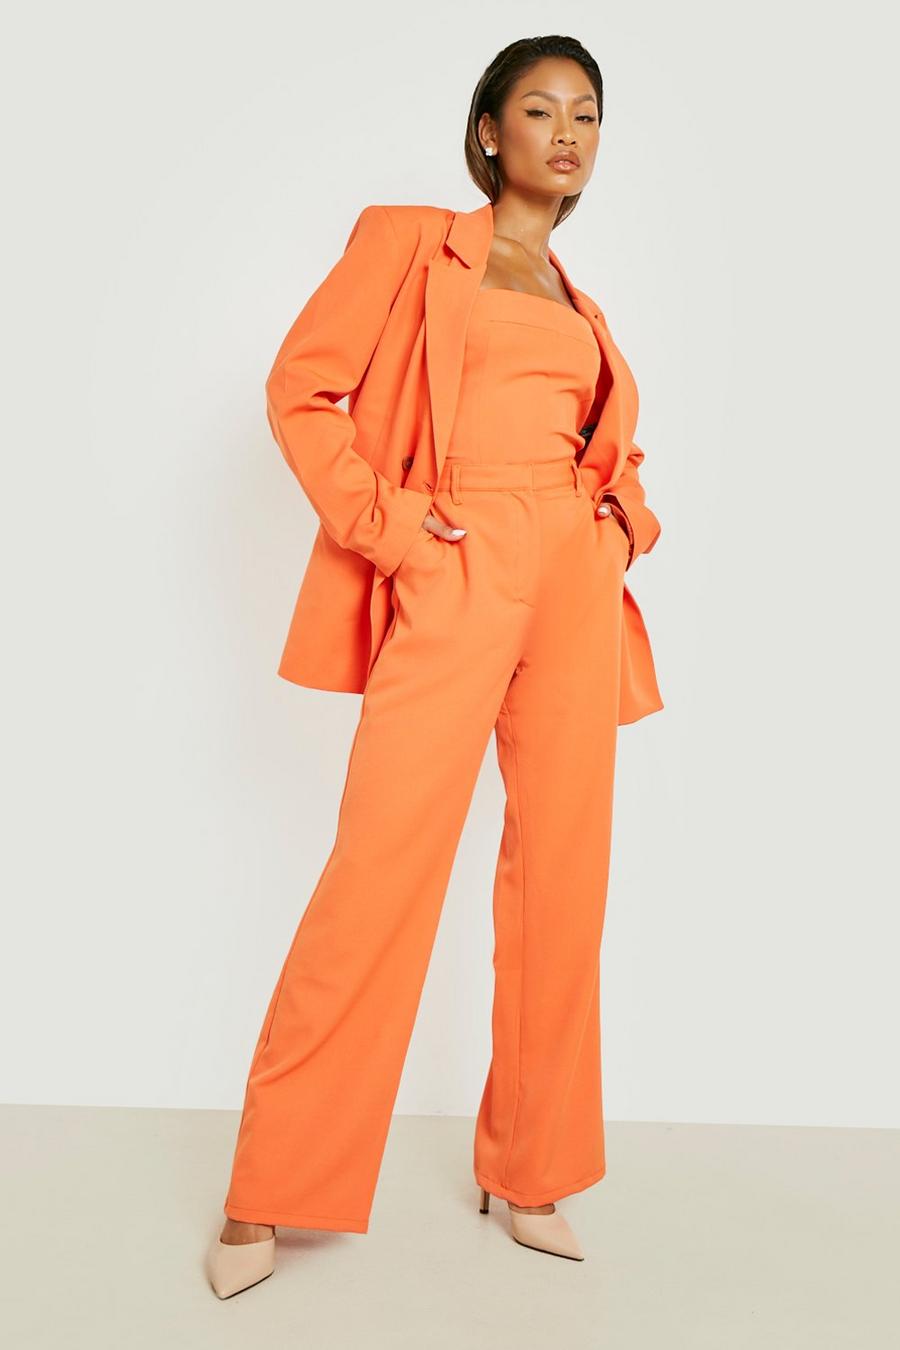 Megan Fox - Pantaloni dritti sartoriali, Orange arancio